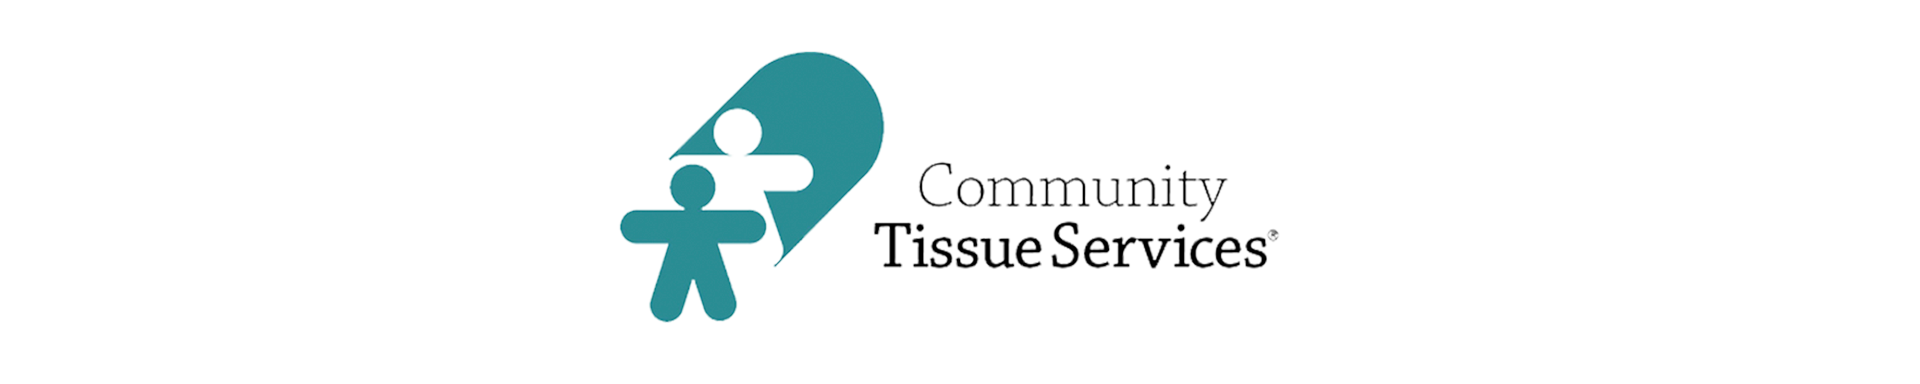 community-tissue-services-productos-artrolife